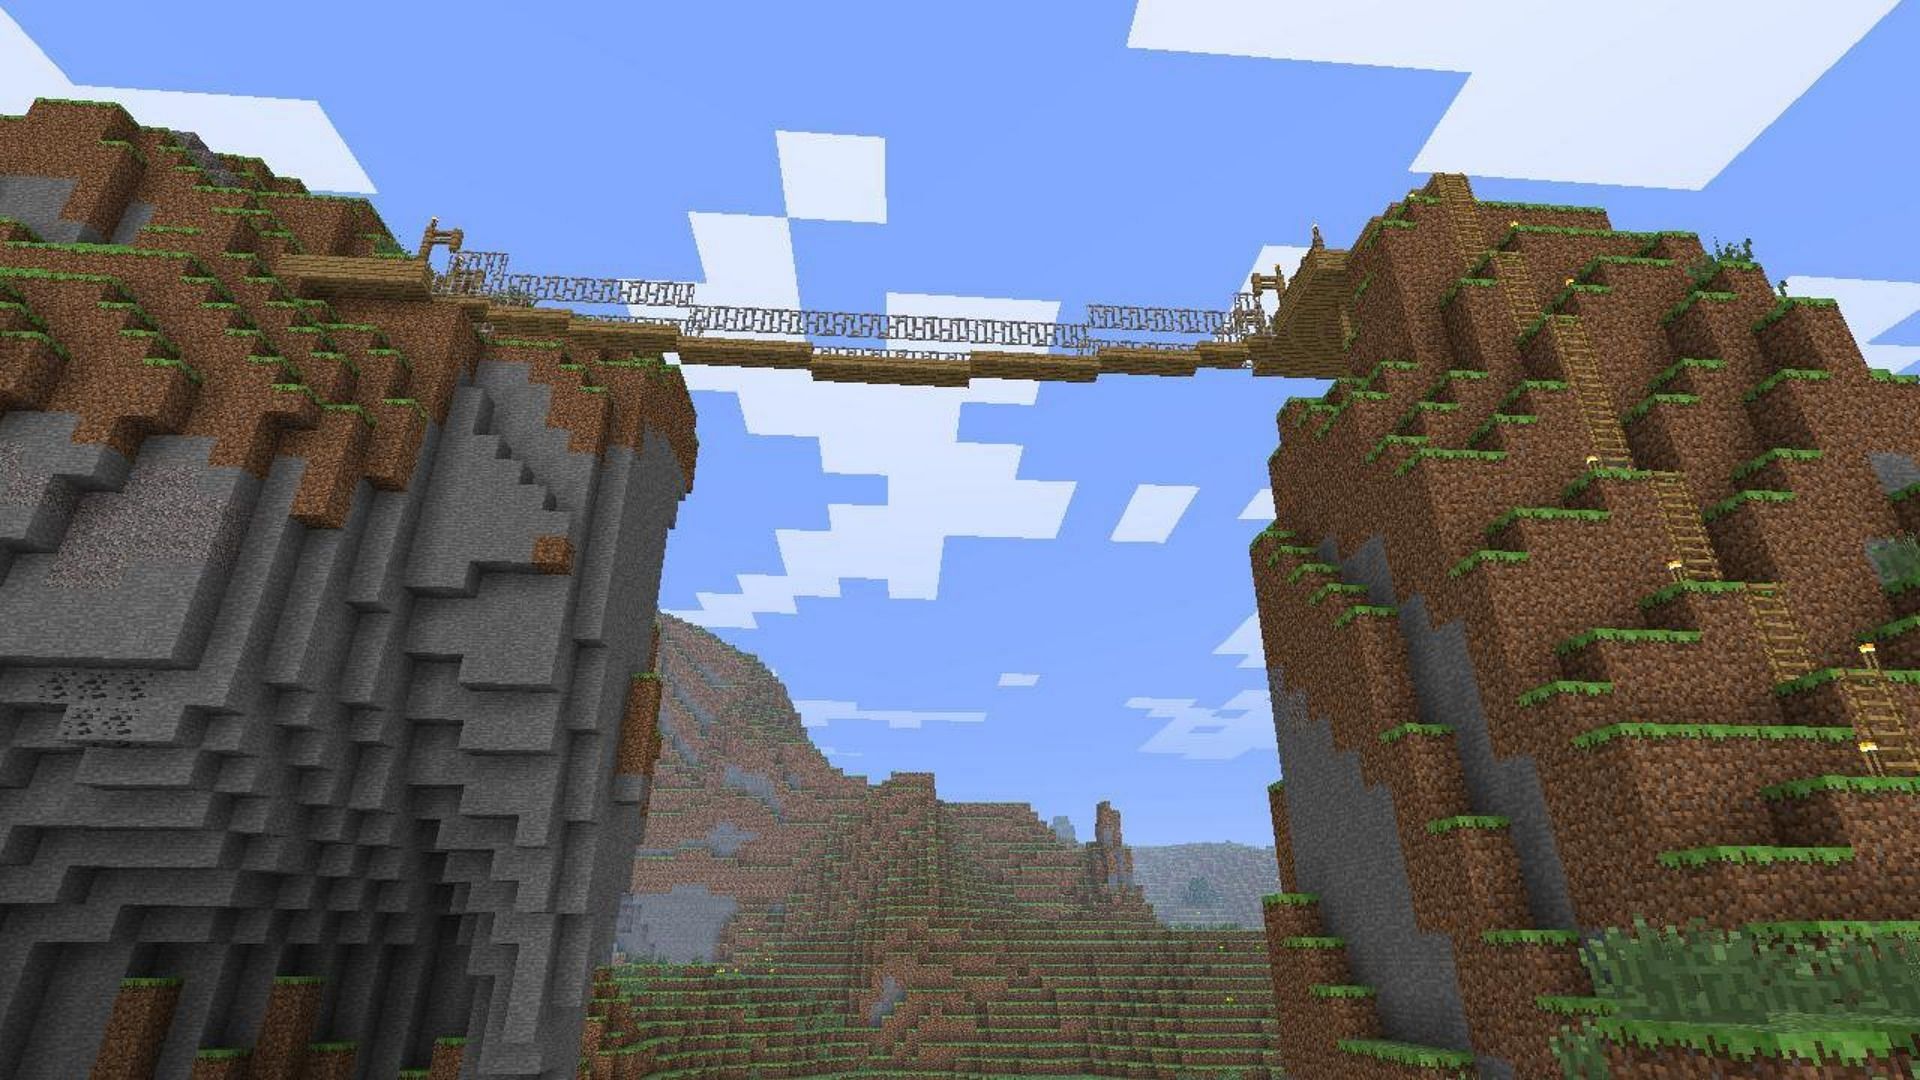 Hanging bridges in Minecraft (Image via Reddit/u/HappySmurfday)